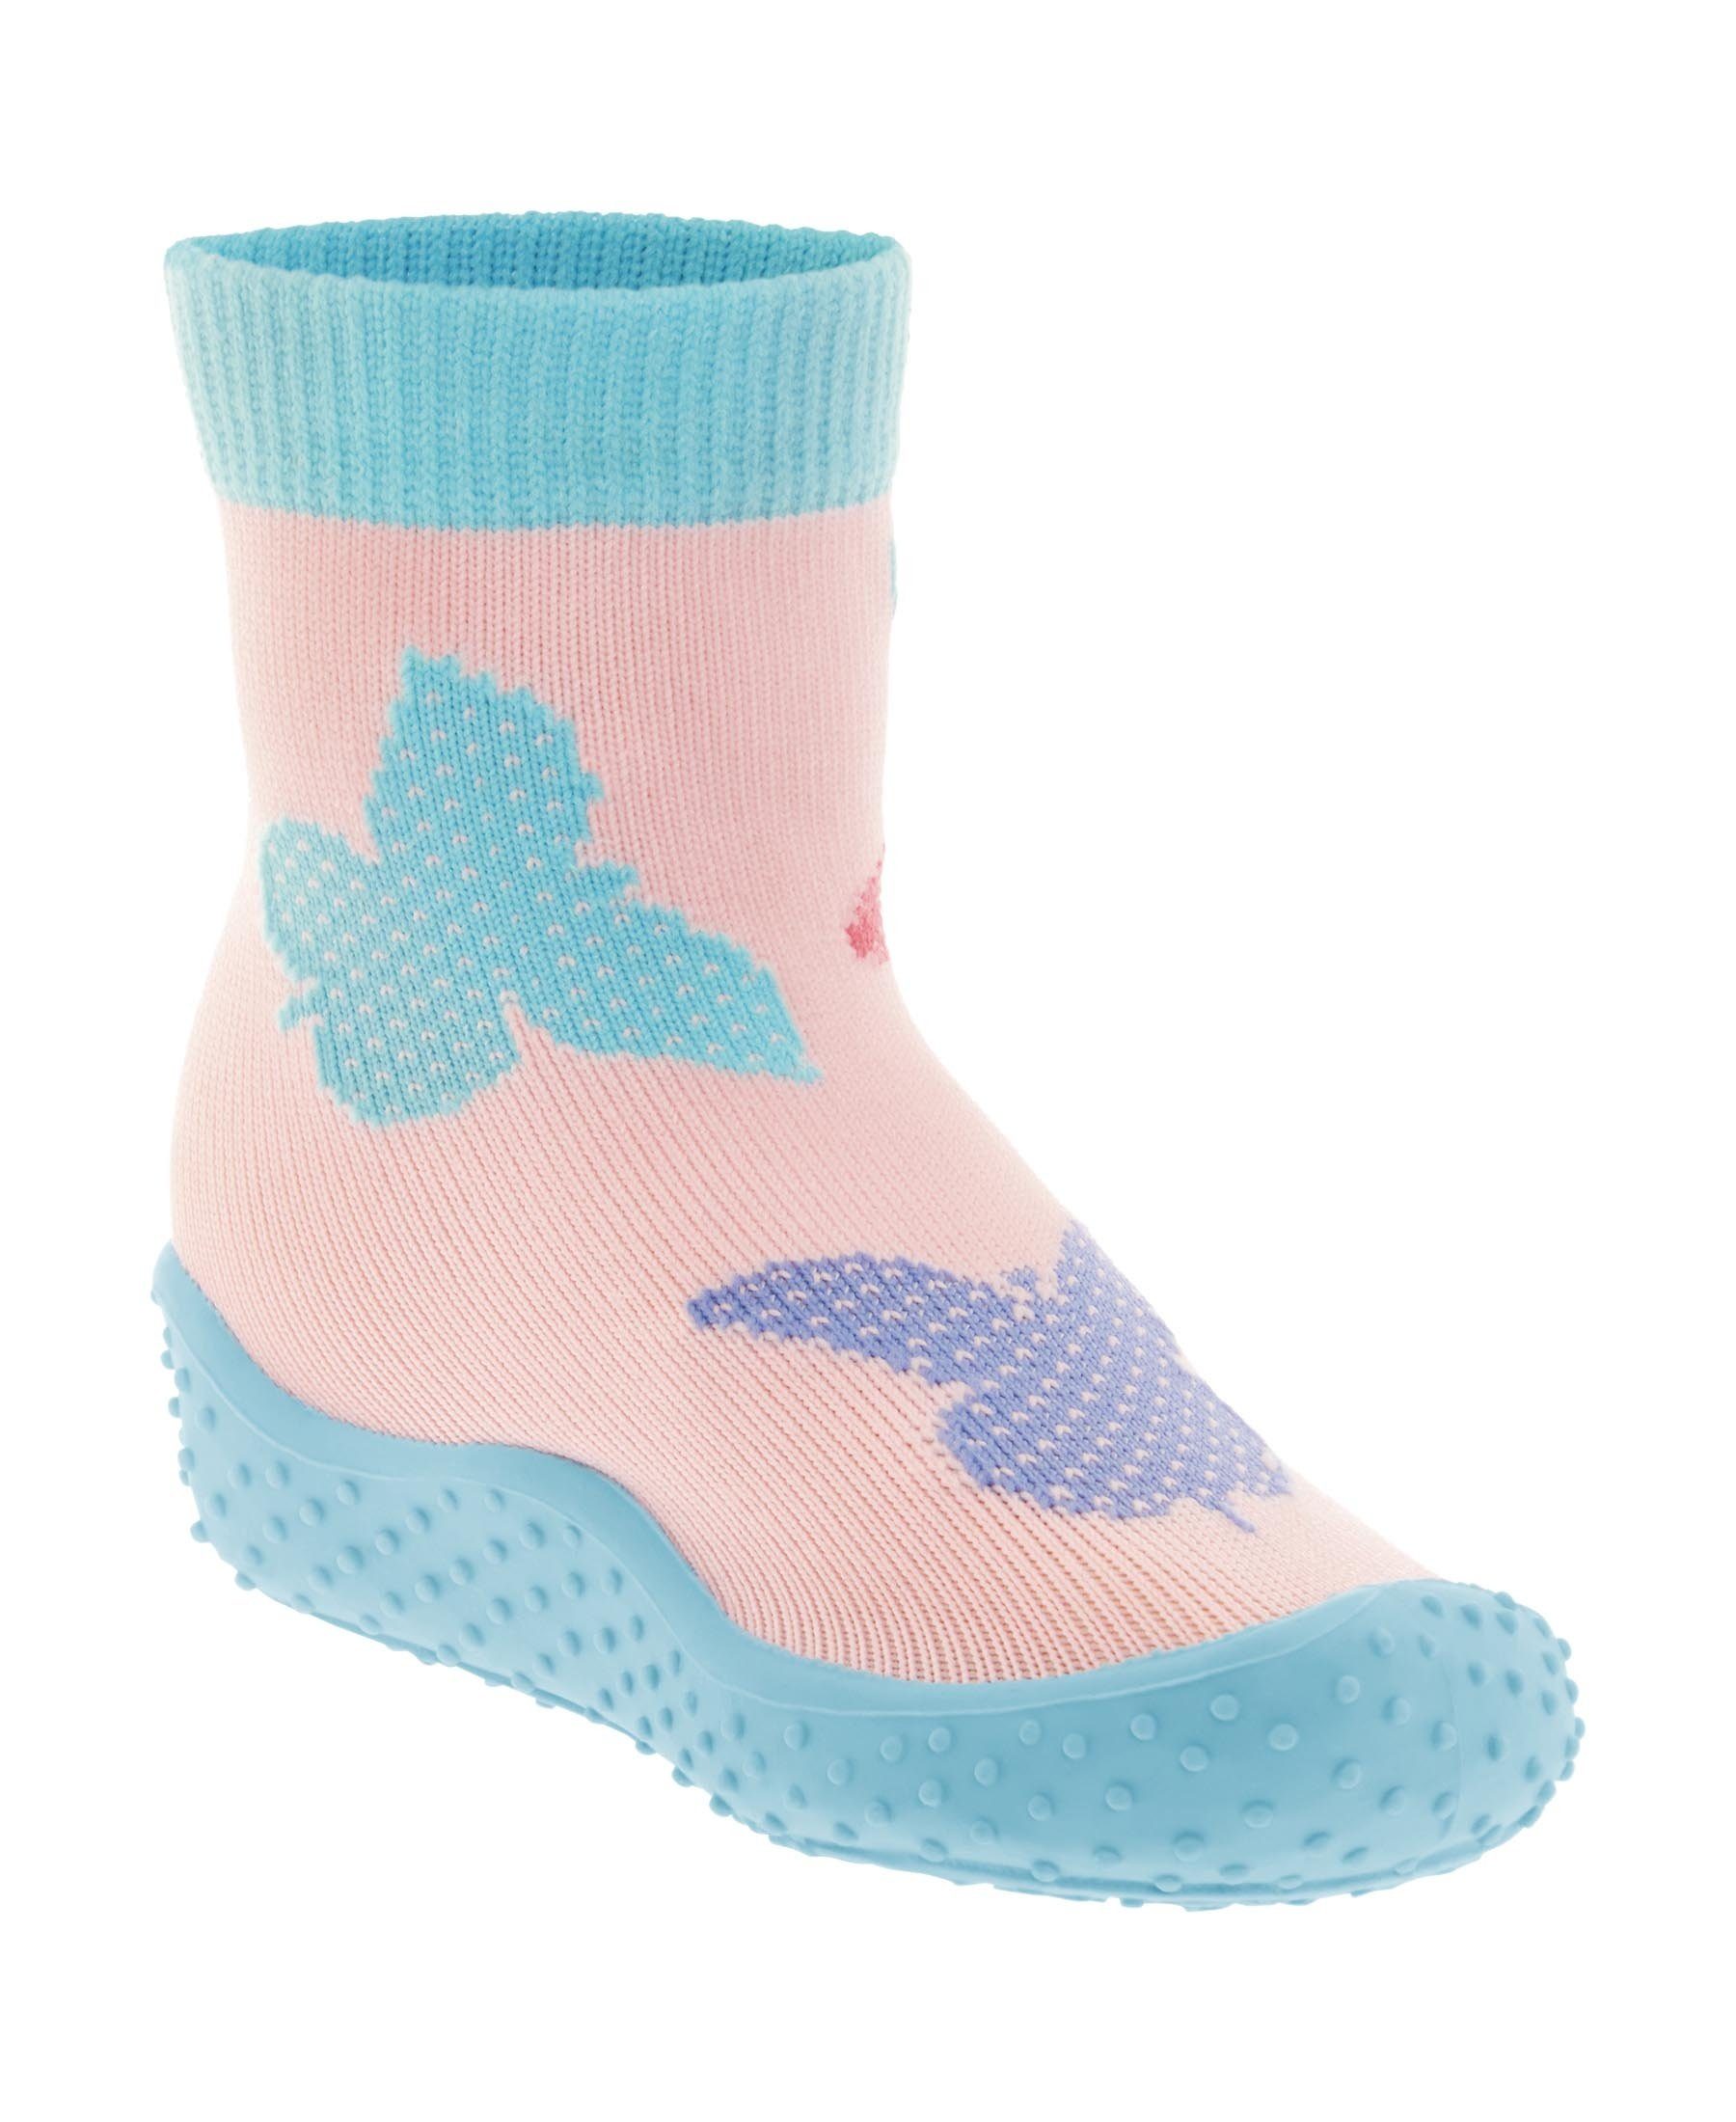 Schmetterlinge Aqua-Socke Playshoes Badeschuh